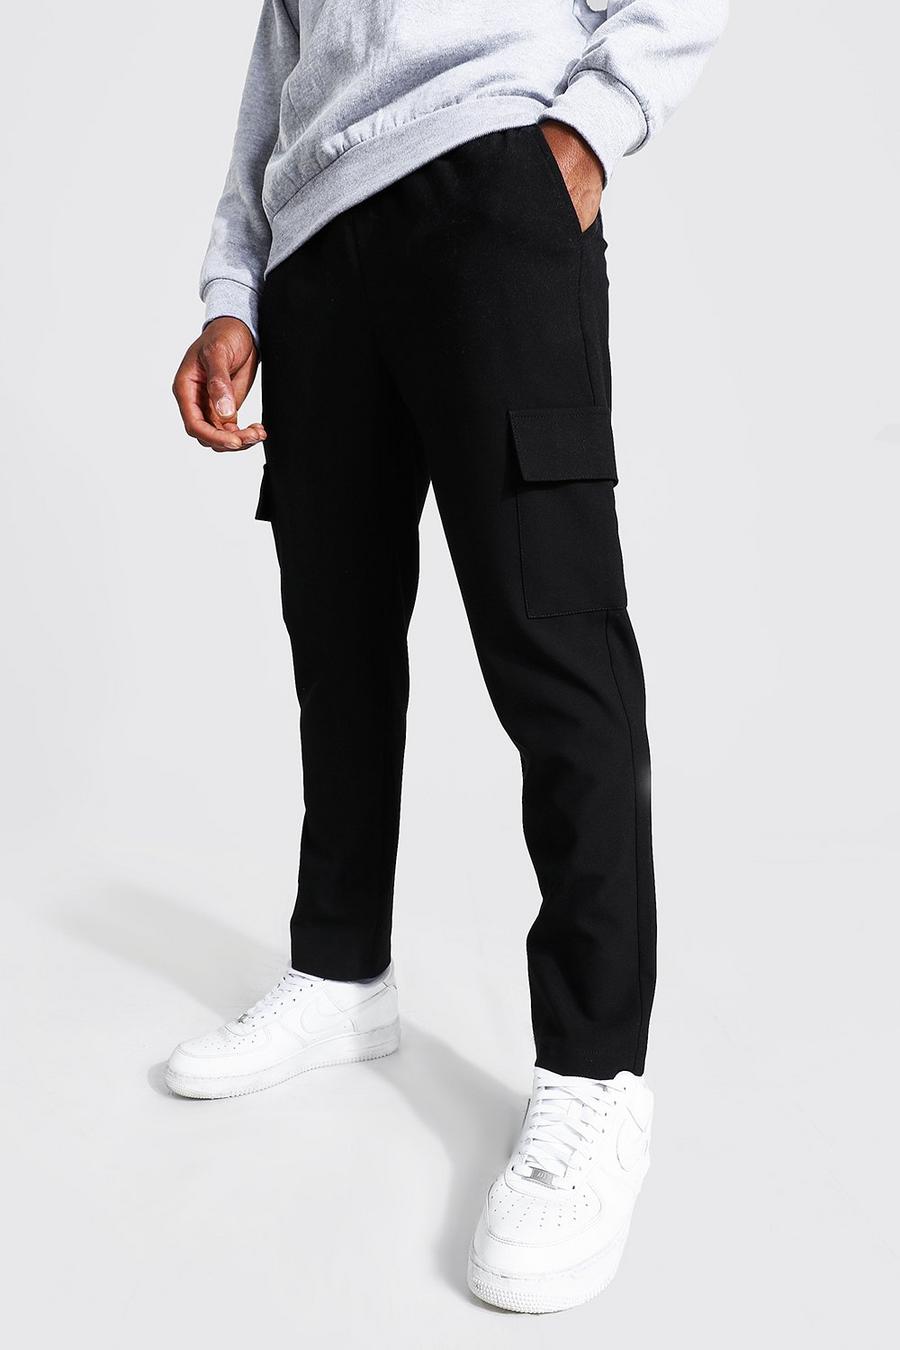 Pantaloni tuta alla caviglia Smart Skinny Fit stile Cargo in tinta unita, Nero negro image number 1